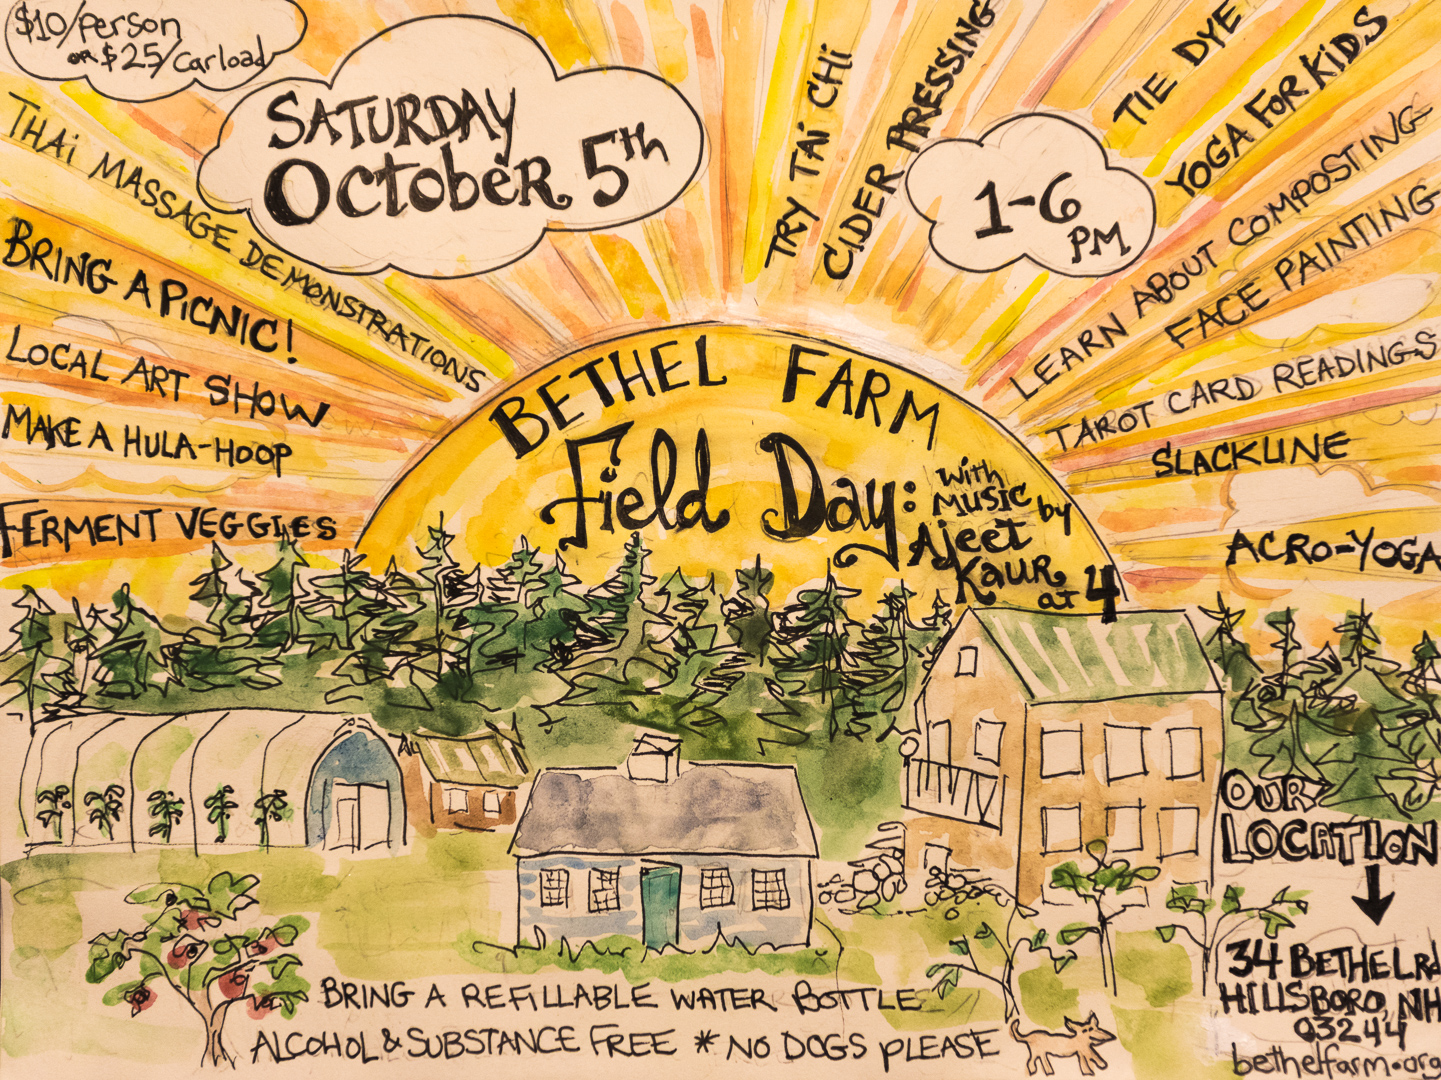 Bethel Farm Field Day